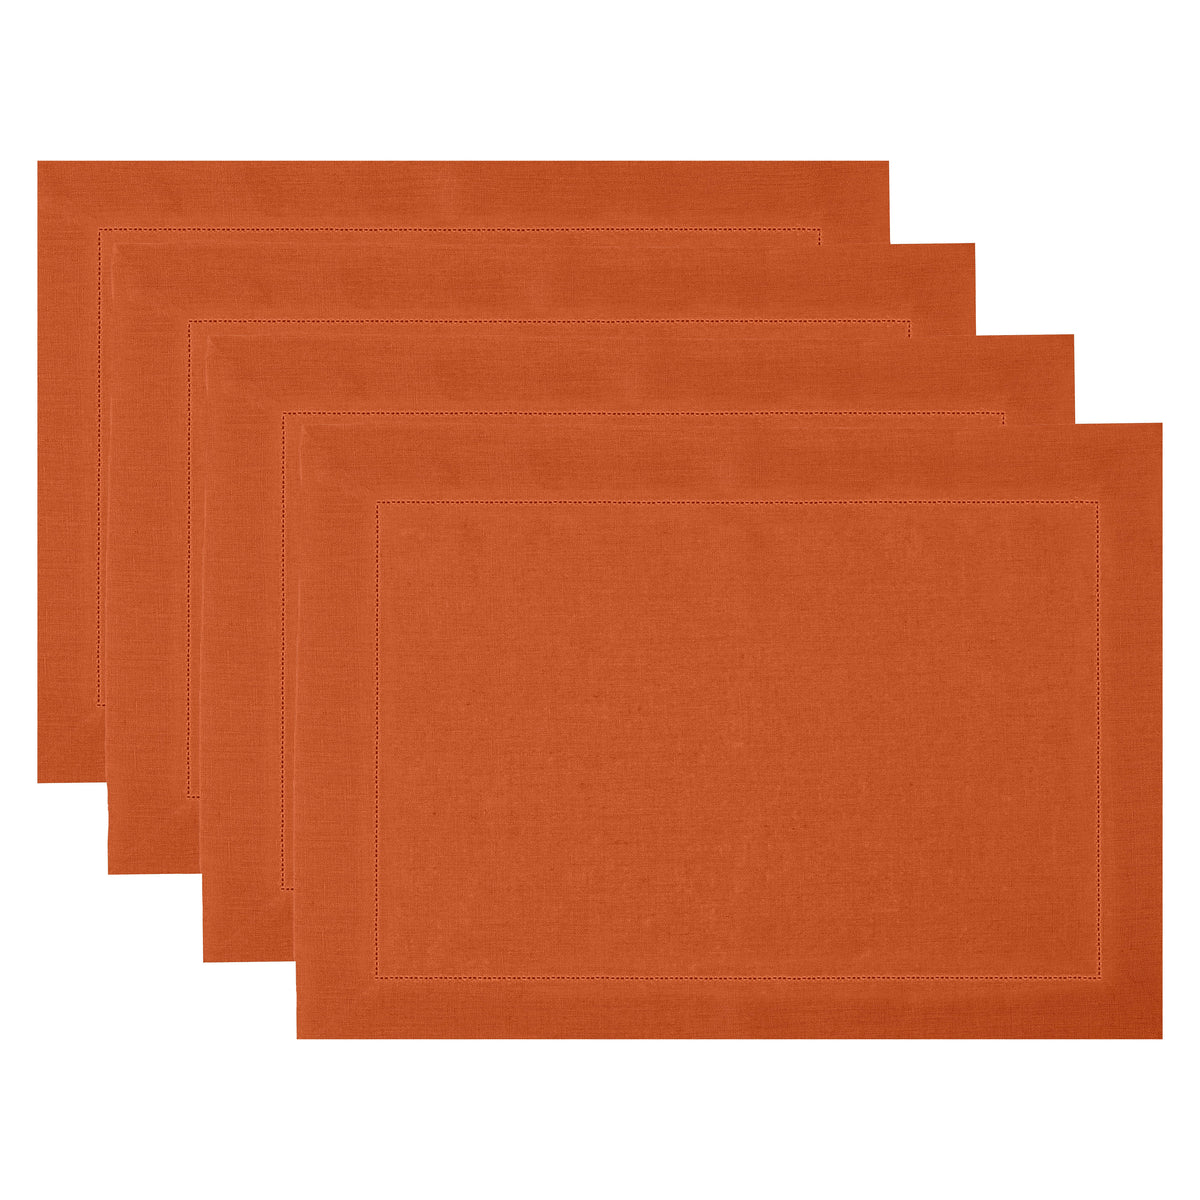 Rust Linen Placemats 14 x 19 Inch Set of 4 - Hemstitch